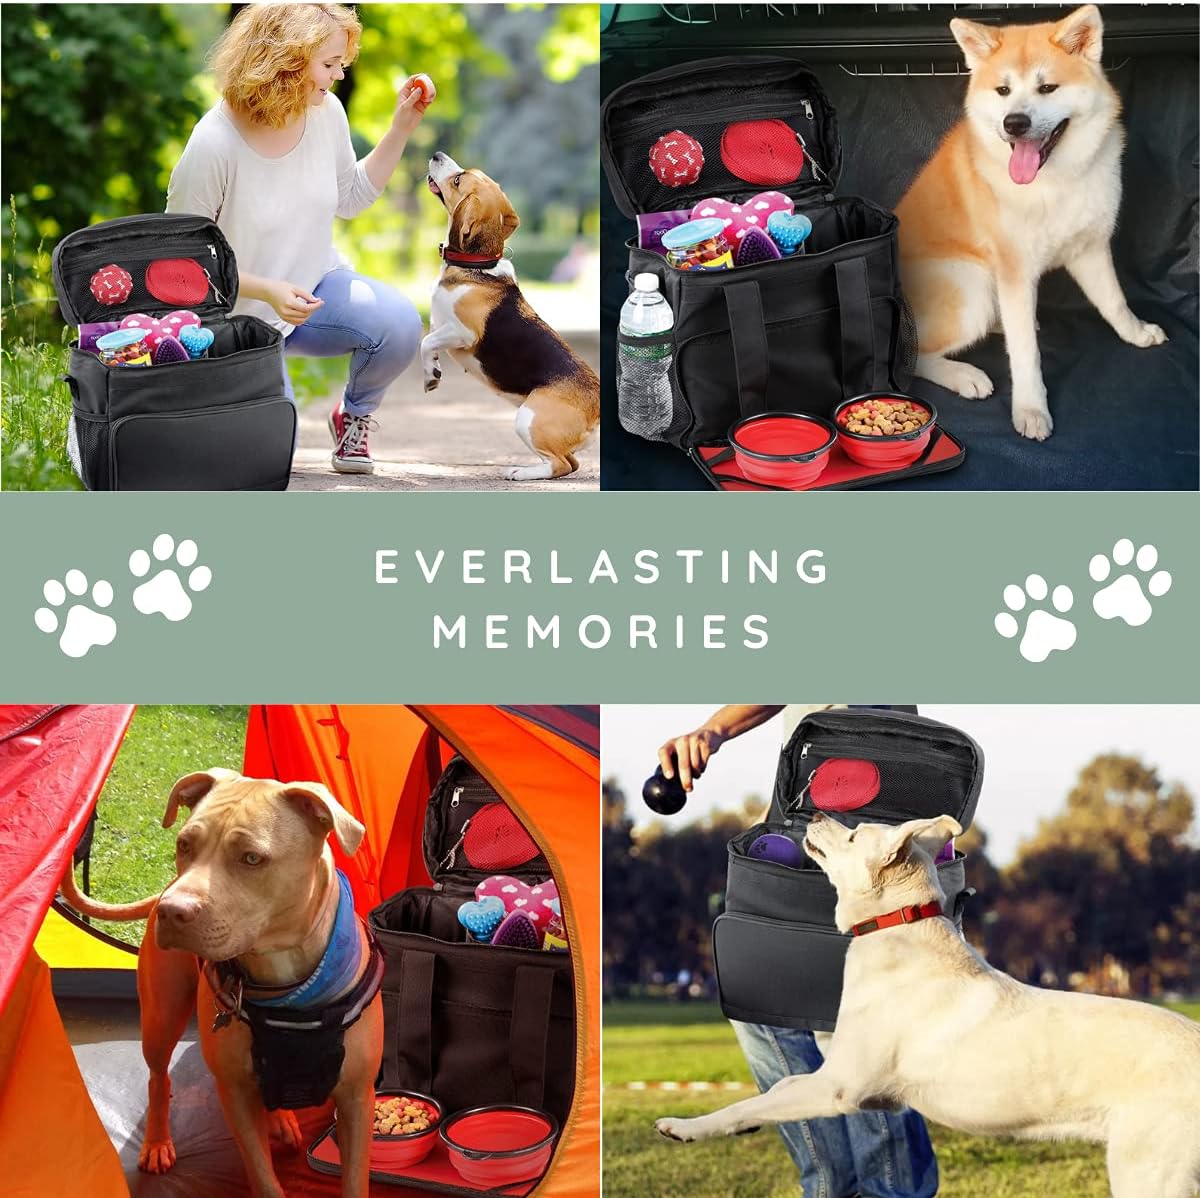 Bundaloo Dog Travel Bag Accessories Supplies Organizer 5-Piece Set, 16 Pack